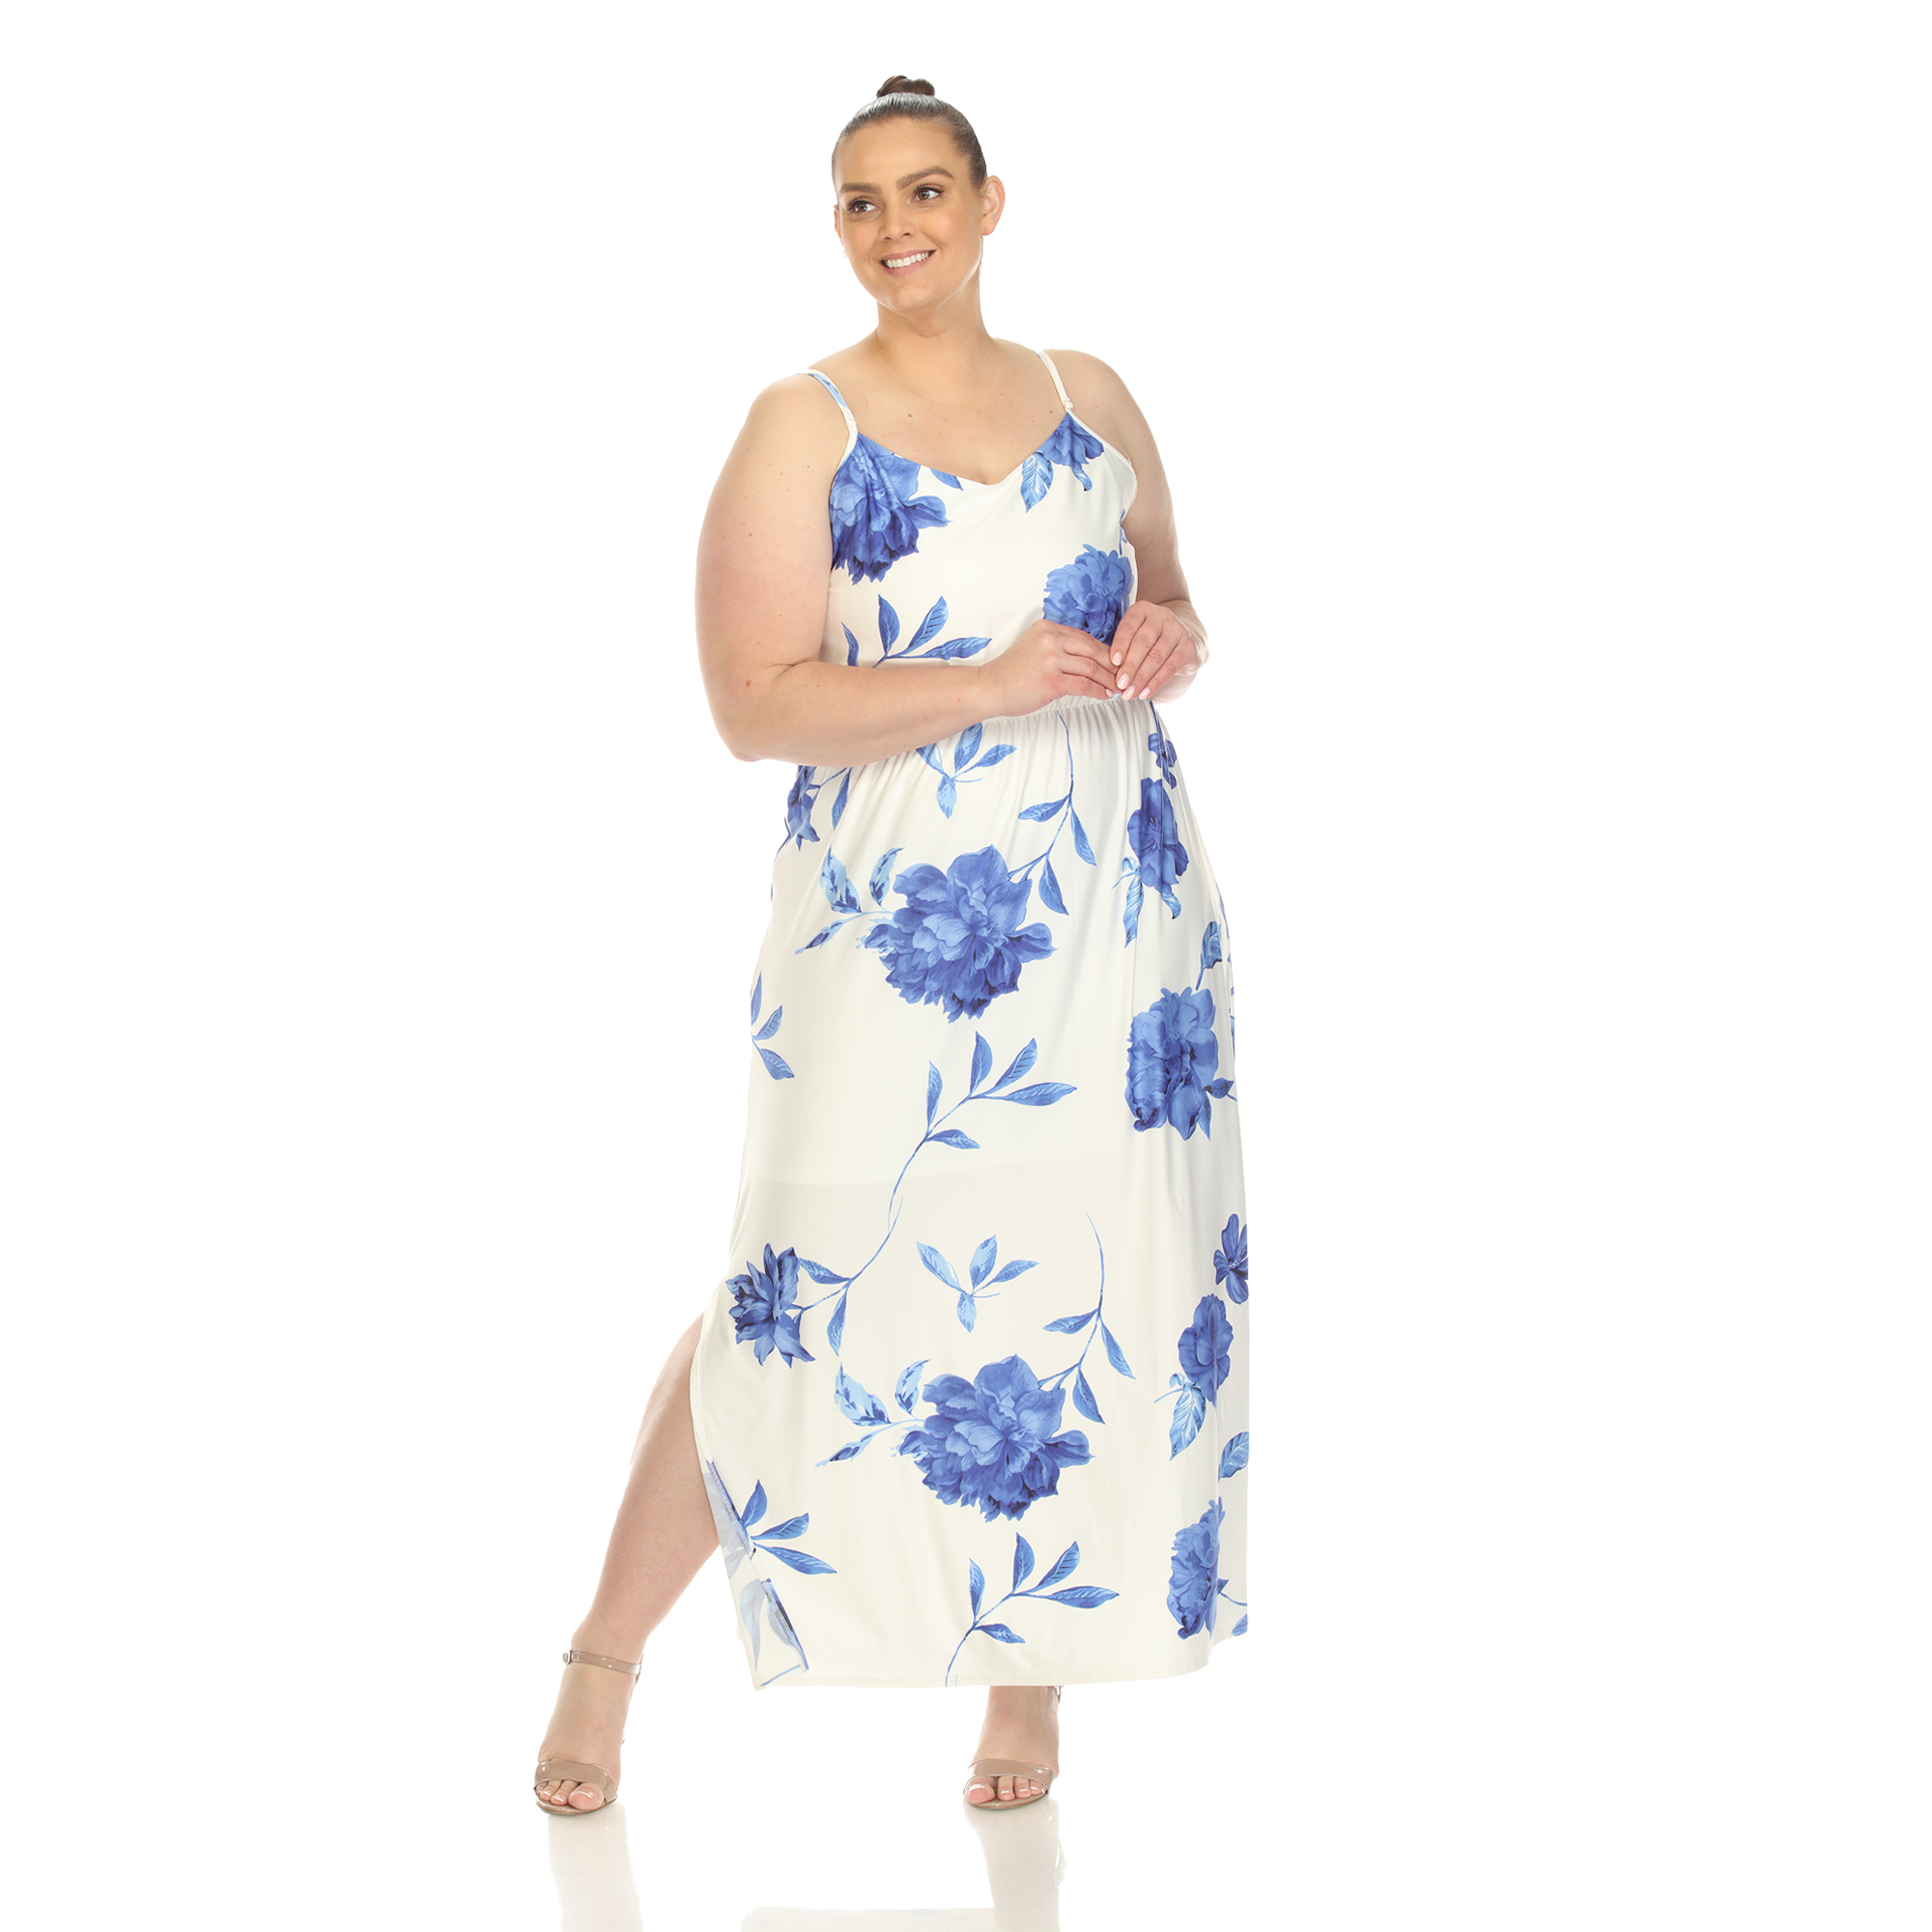 White Mark Women's Floral Print Spaghetti Strap Side Slit Maxi Dress - White/Blue, Large